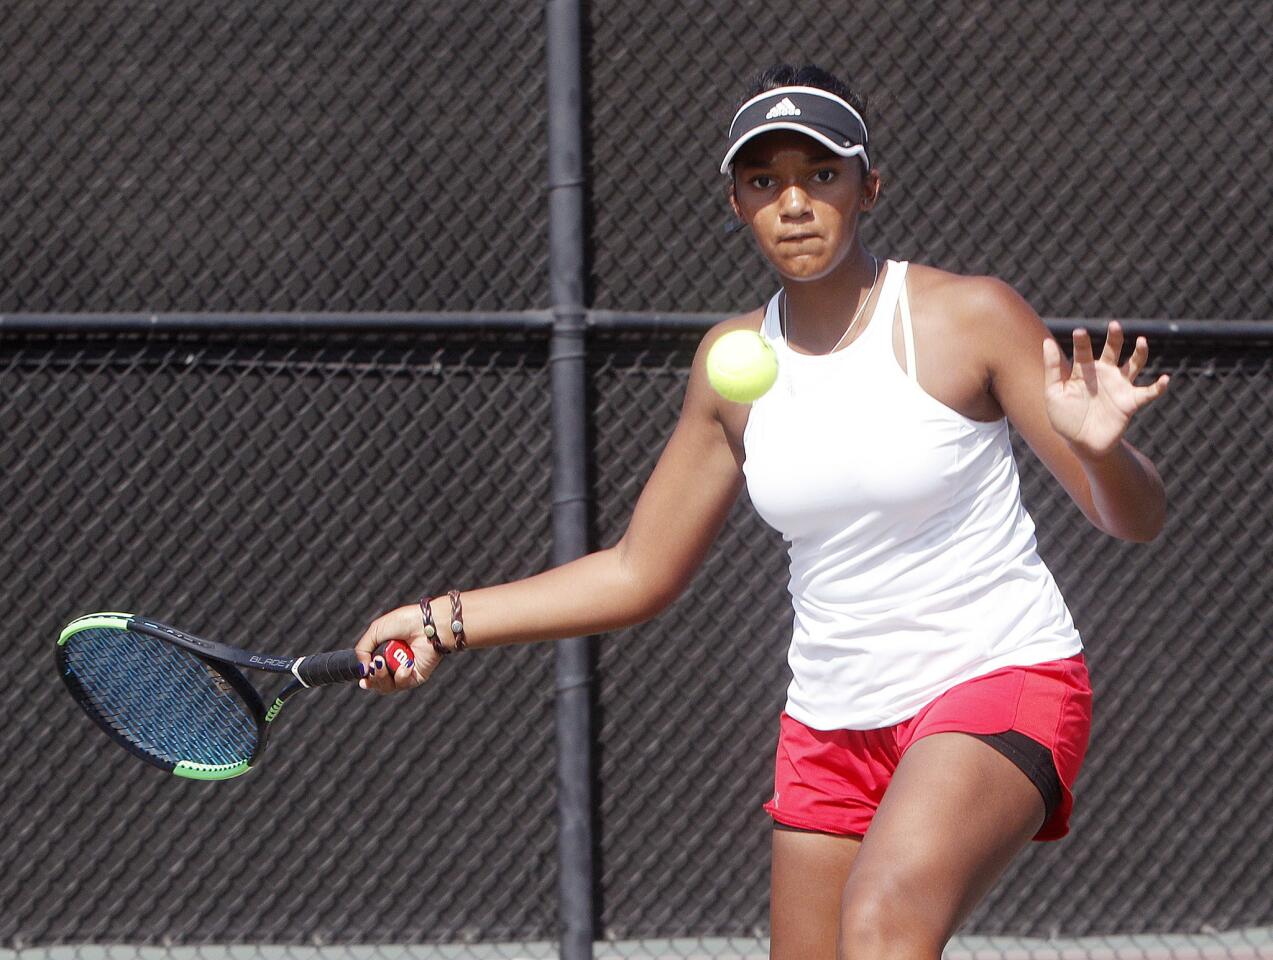 Photo Gallery: Pacific League girls' tennis at Burroughs High School